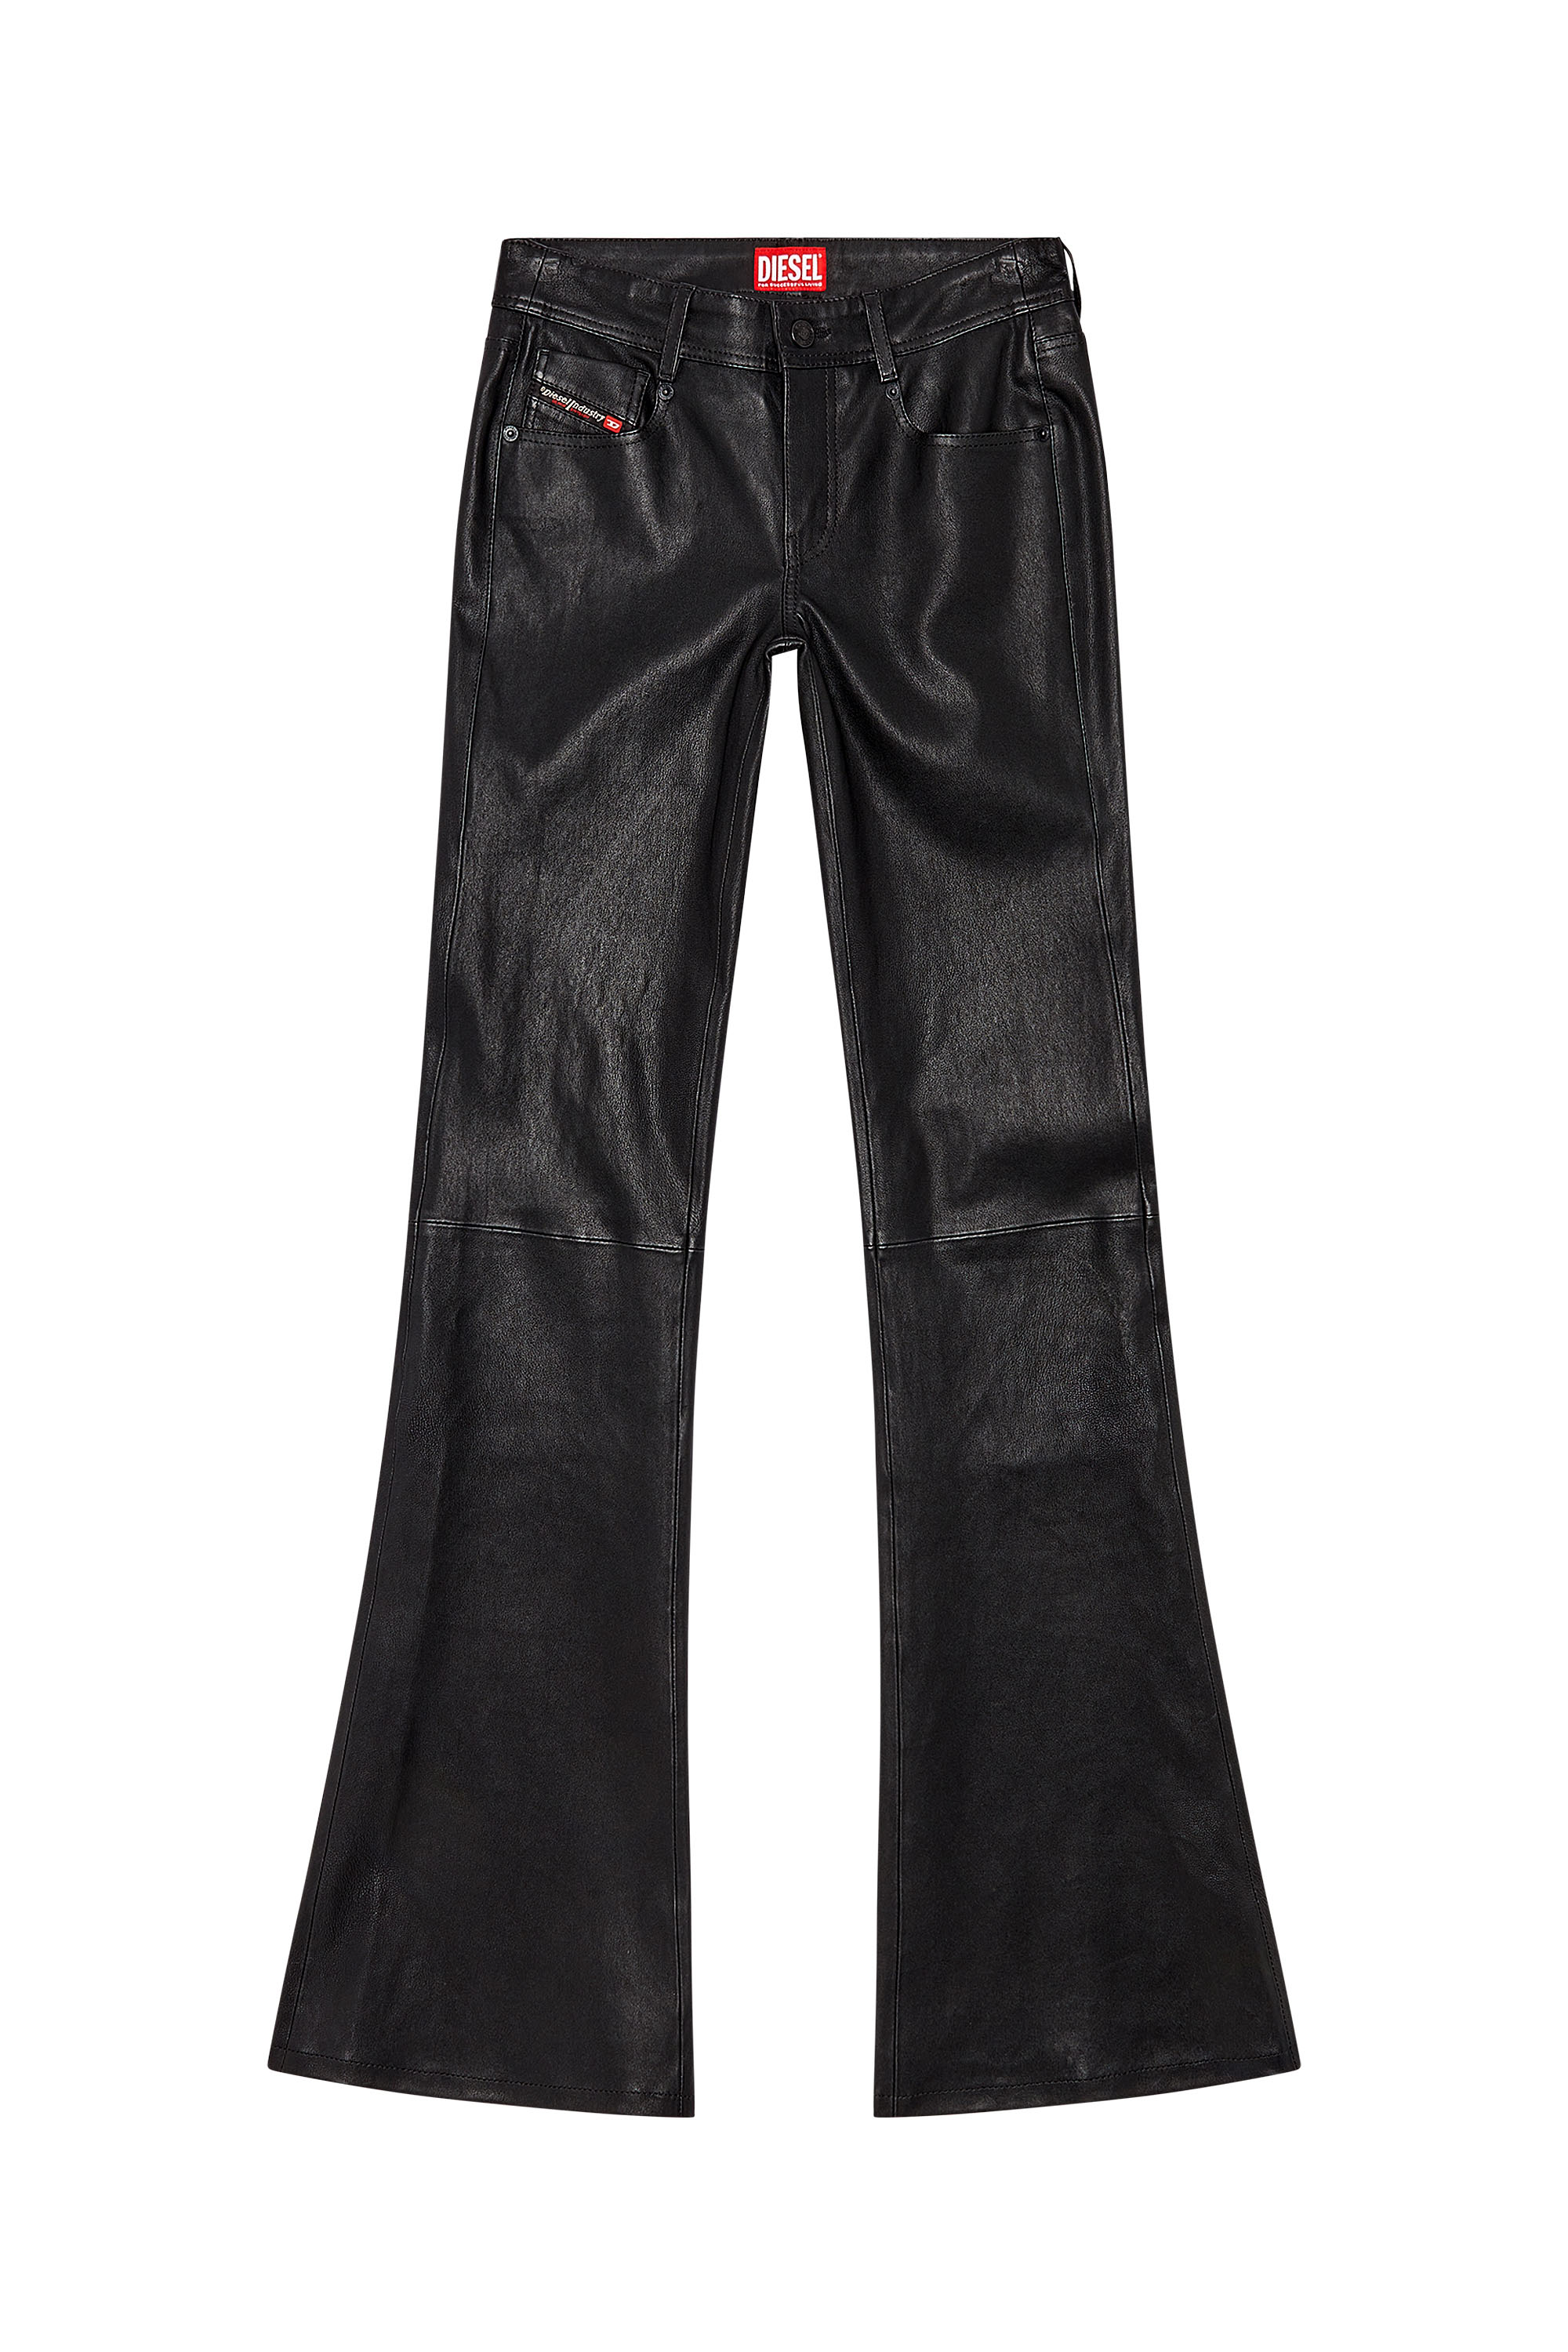 Diesel - L-STELLAR, Woman Bootcut pants in stretch leather in Black - Image 3